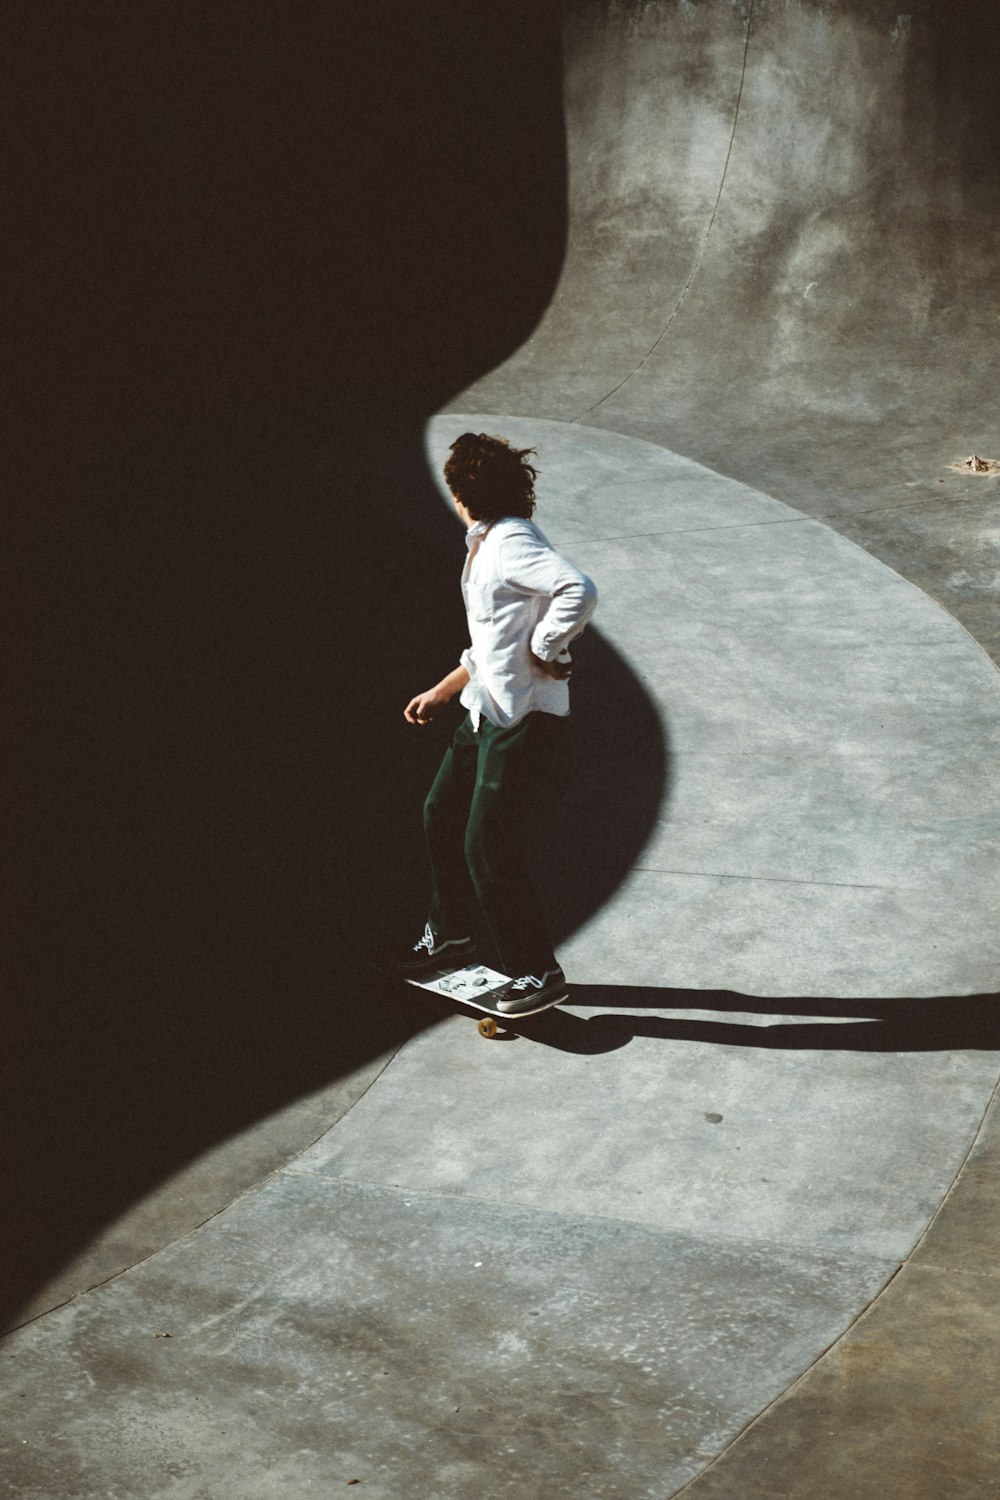 man riding skateboard